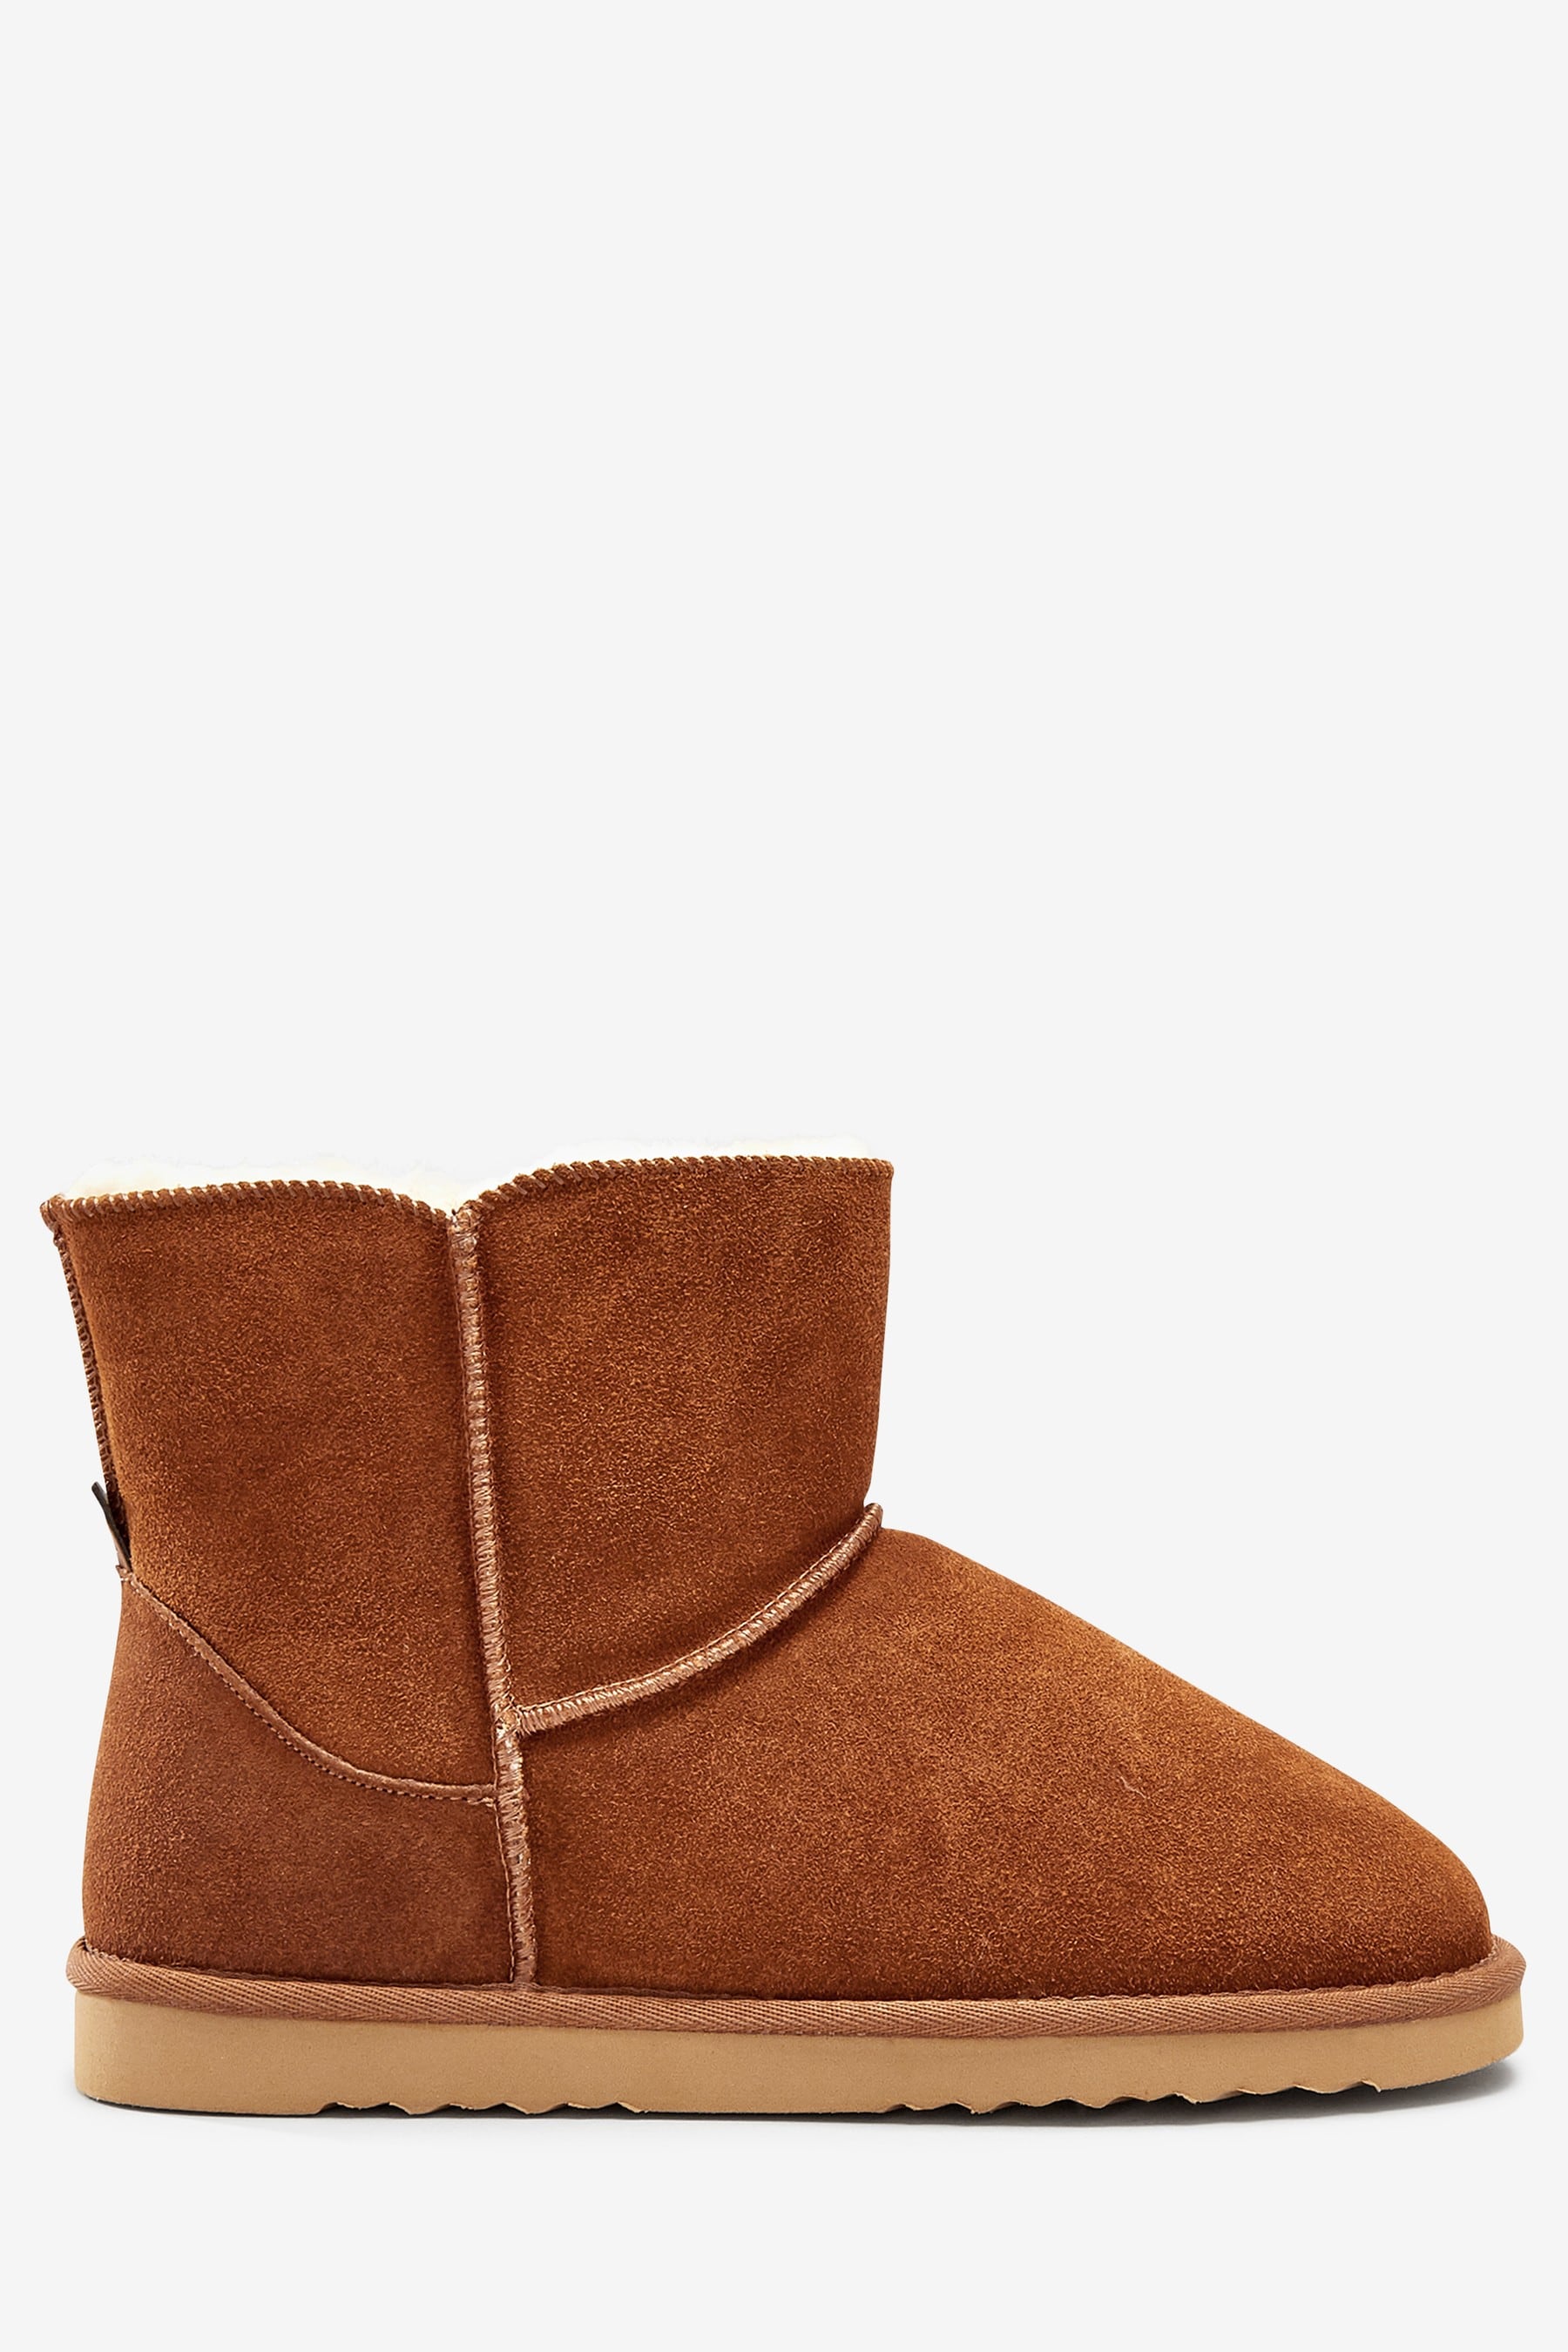 Buy Chestnut Brown Suede Slipper Boots from Next Ireland